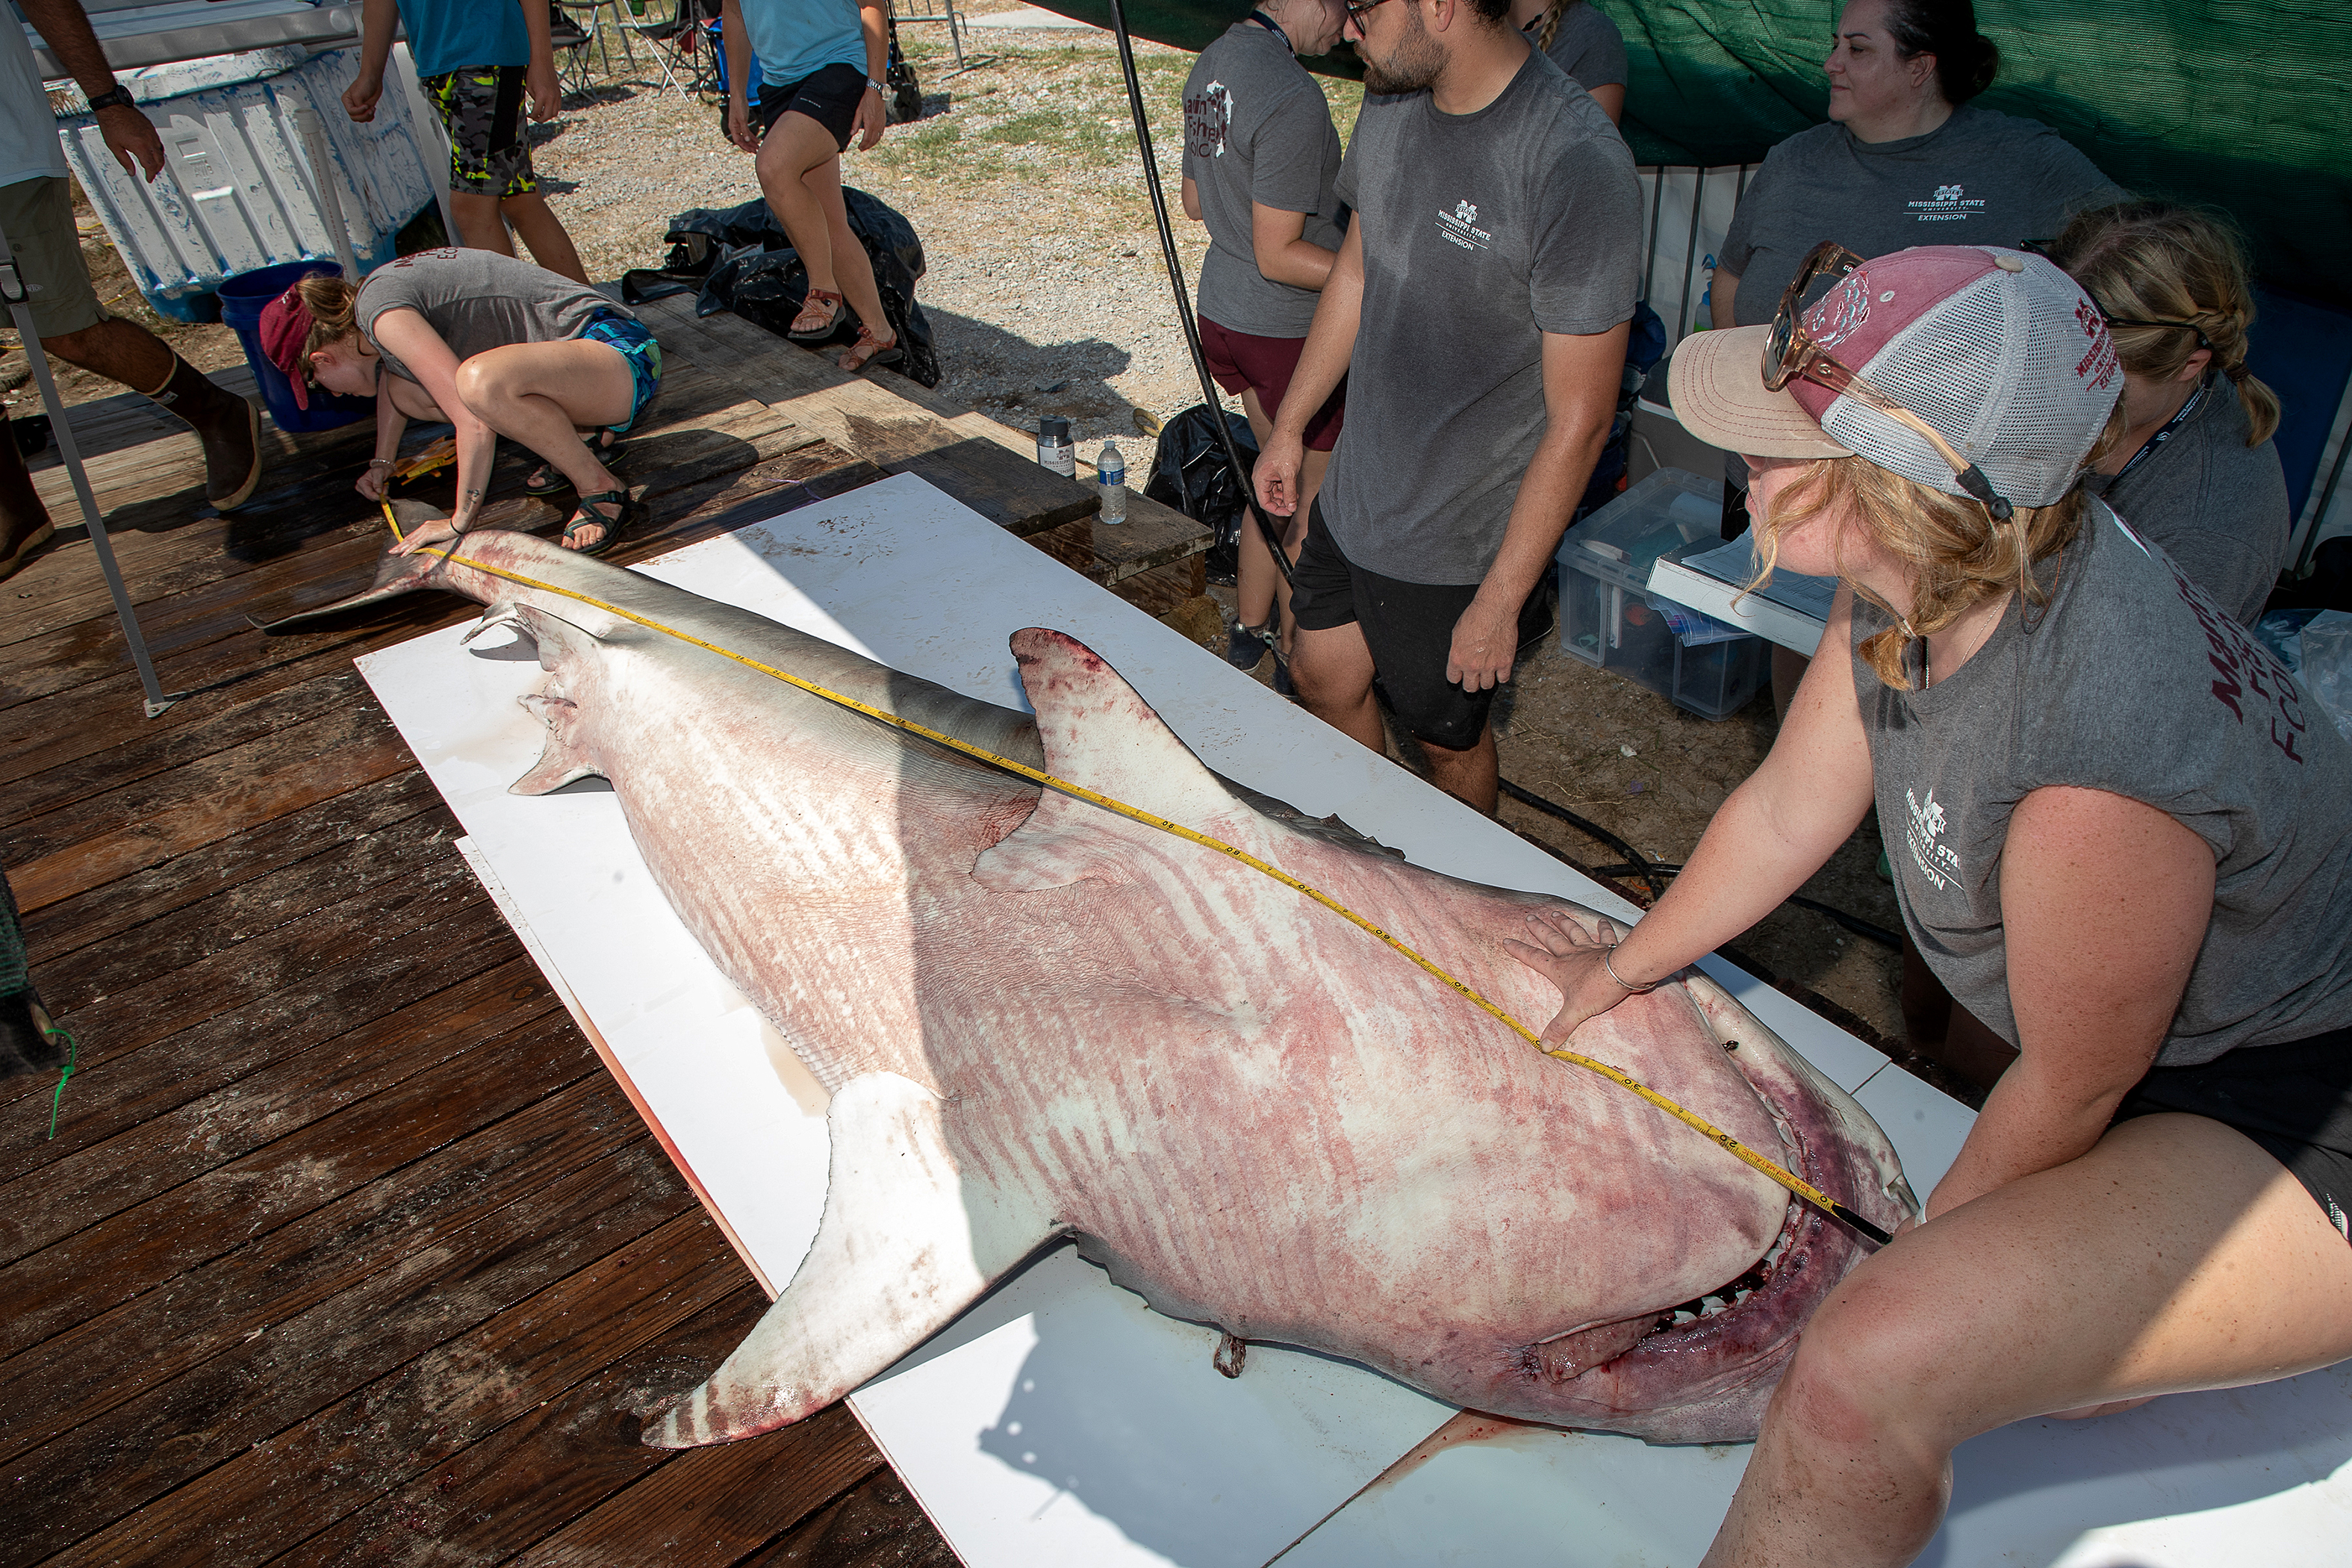 Man catches 1,000 pound tiger shark during Alabama Deep Sea